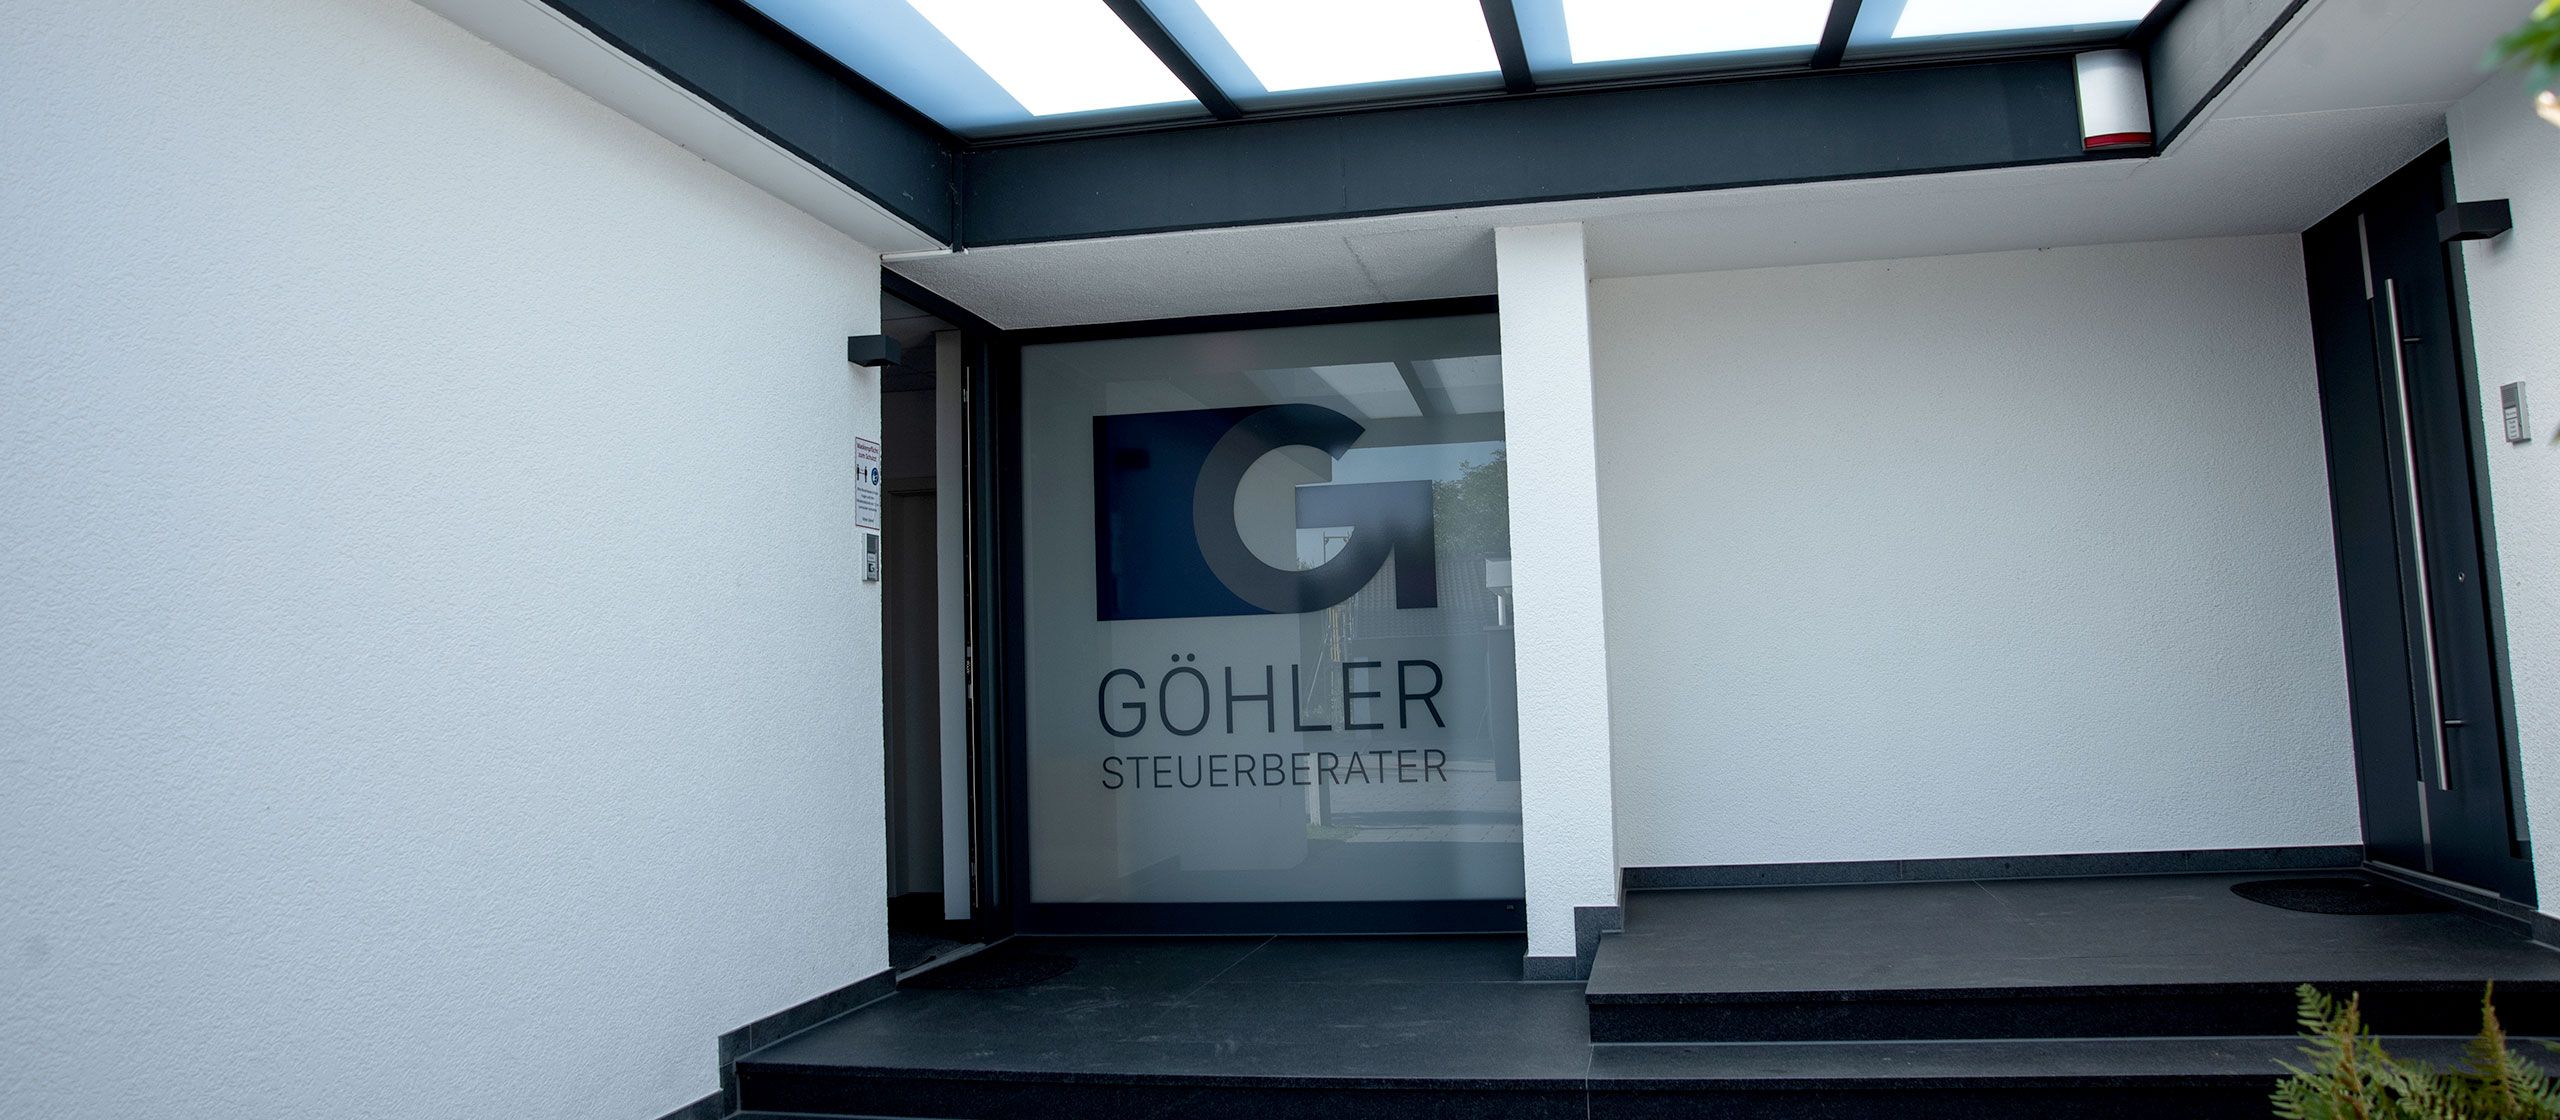 Steuerberatung Göhler Slider 6